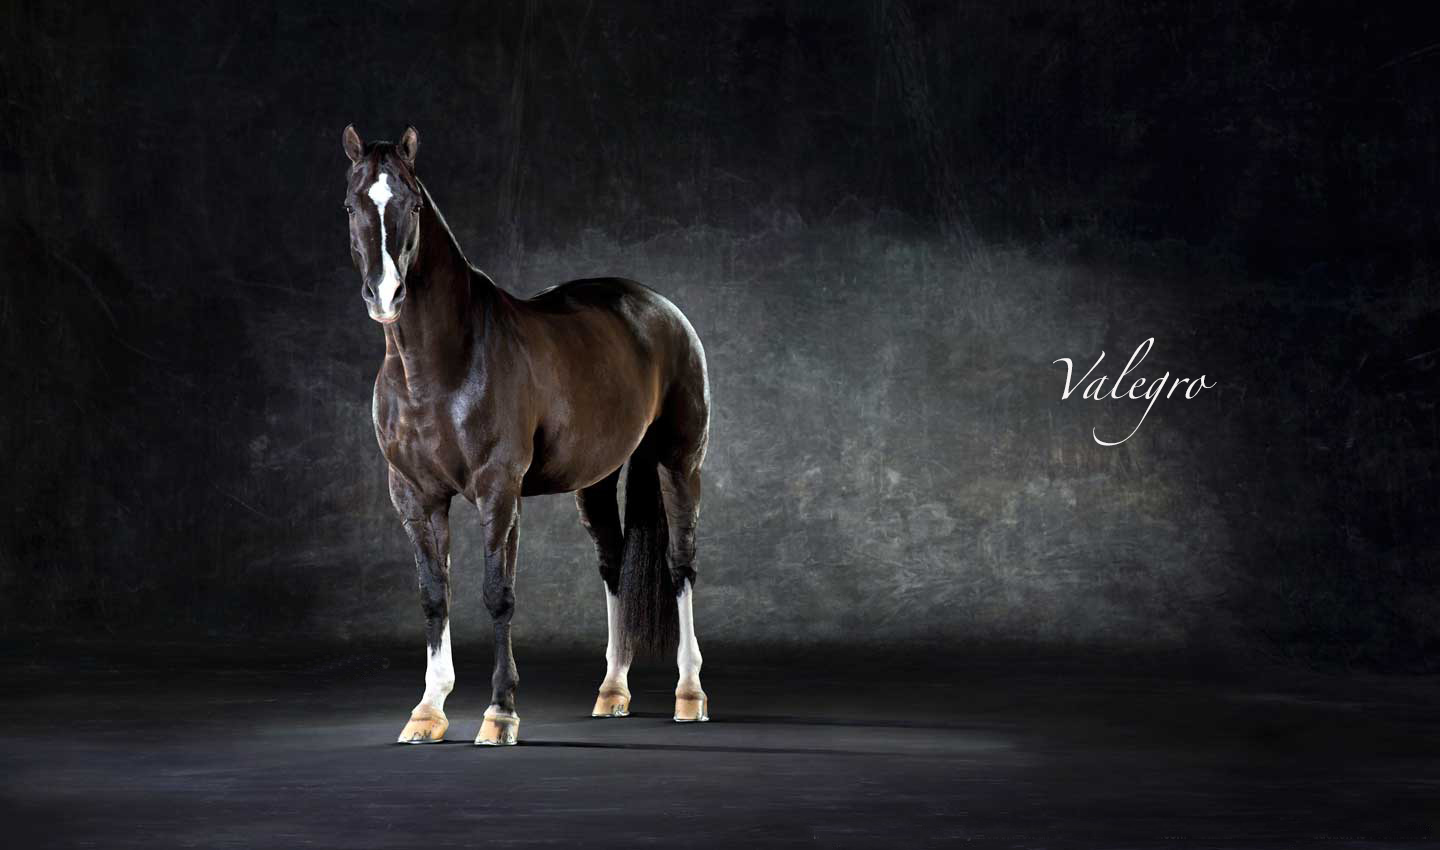 Valegro_Olympic_Dressage_Gold_Medal_Horse-black-animal-equestrian-portrait-photography-photographer_Lindsay_Robertson